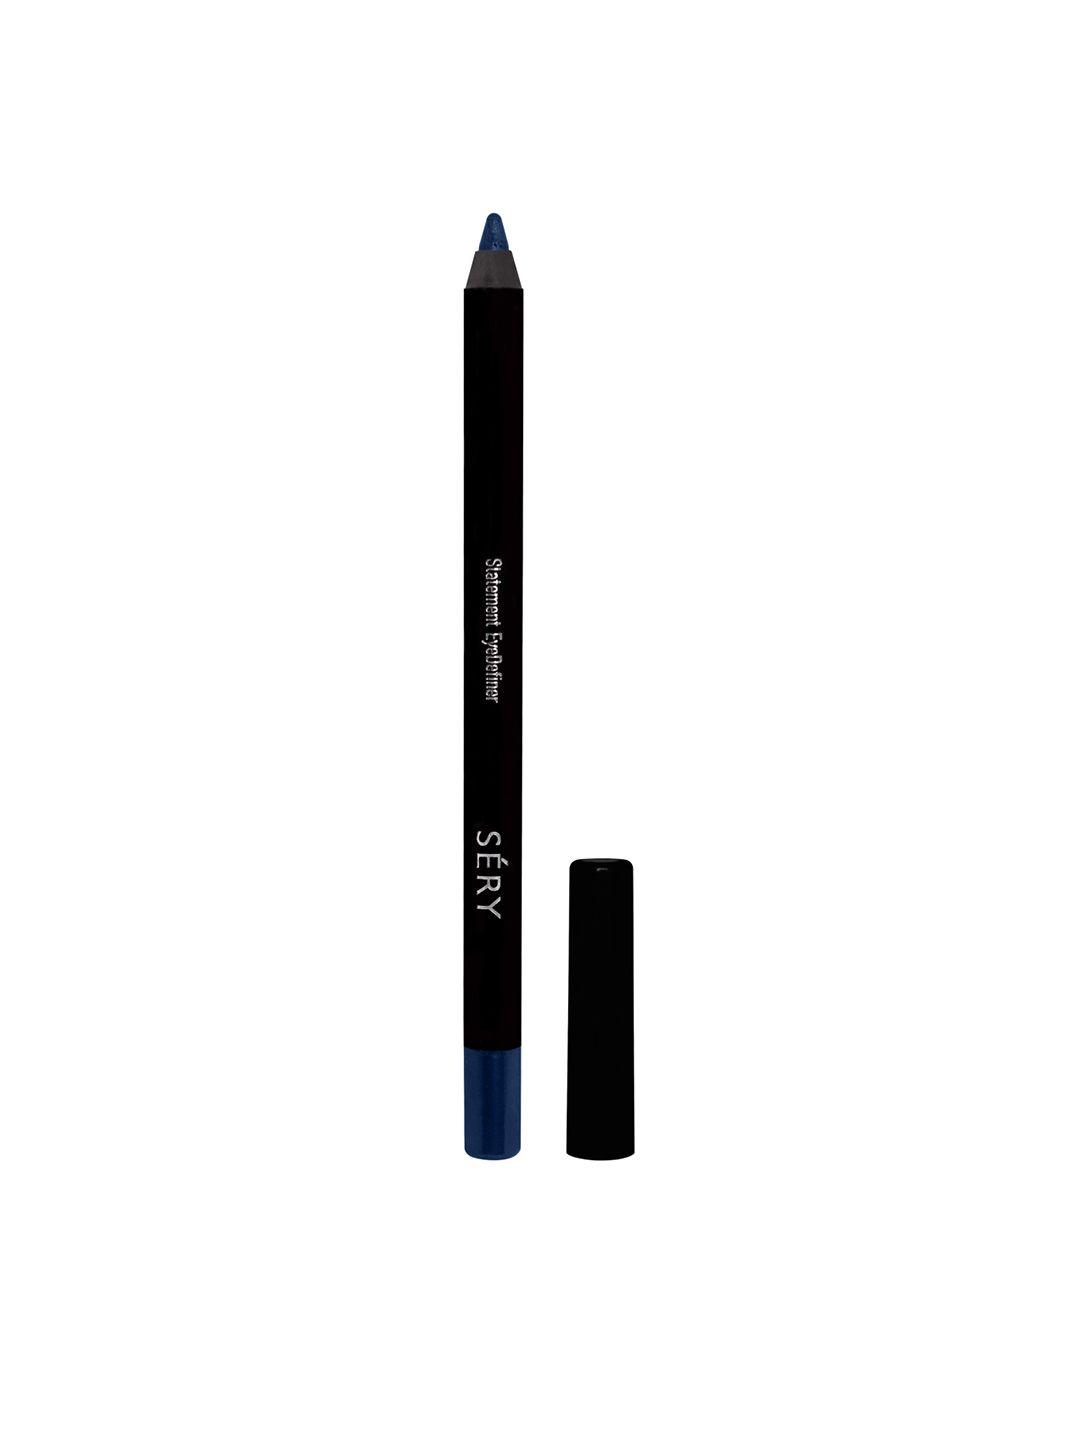 sery statement eyedefiner 24 hours stay one stroke colour eyeliner pencil 1.2 g - cool indigo